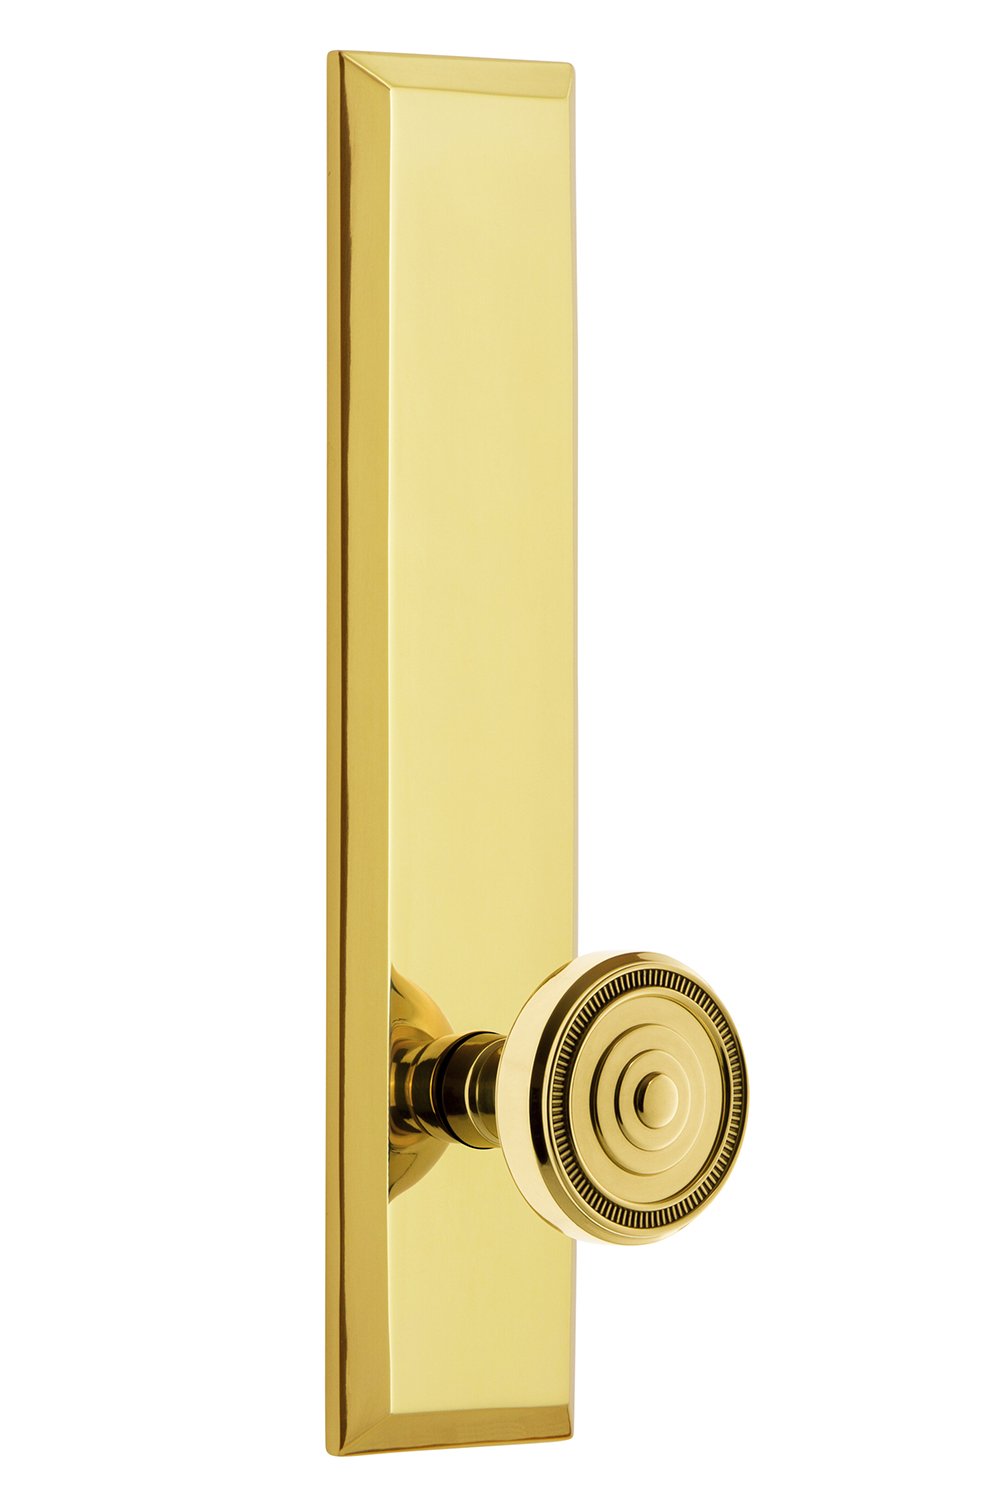 Grandeur 835946 Hardware Fifth Avenue Tall Plate Soleil Knob Size, Passage-Backset: 2.375", Polished Brass - Like New